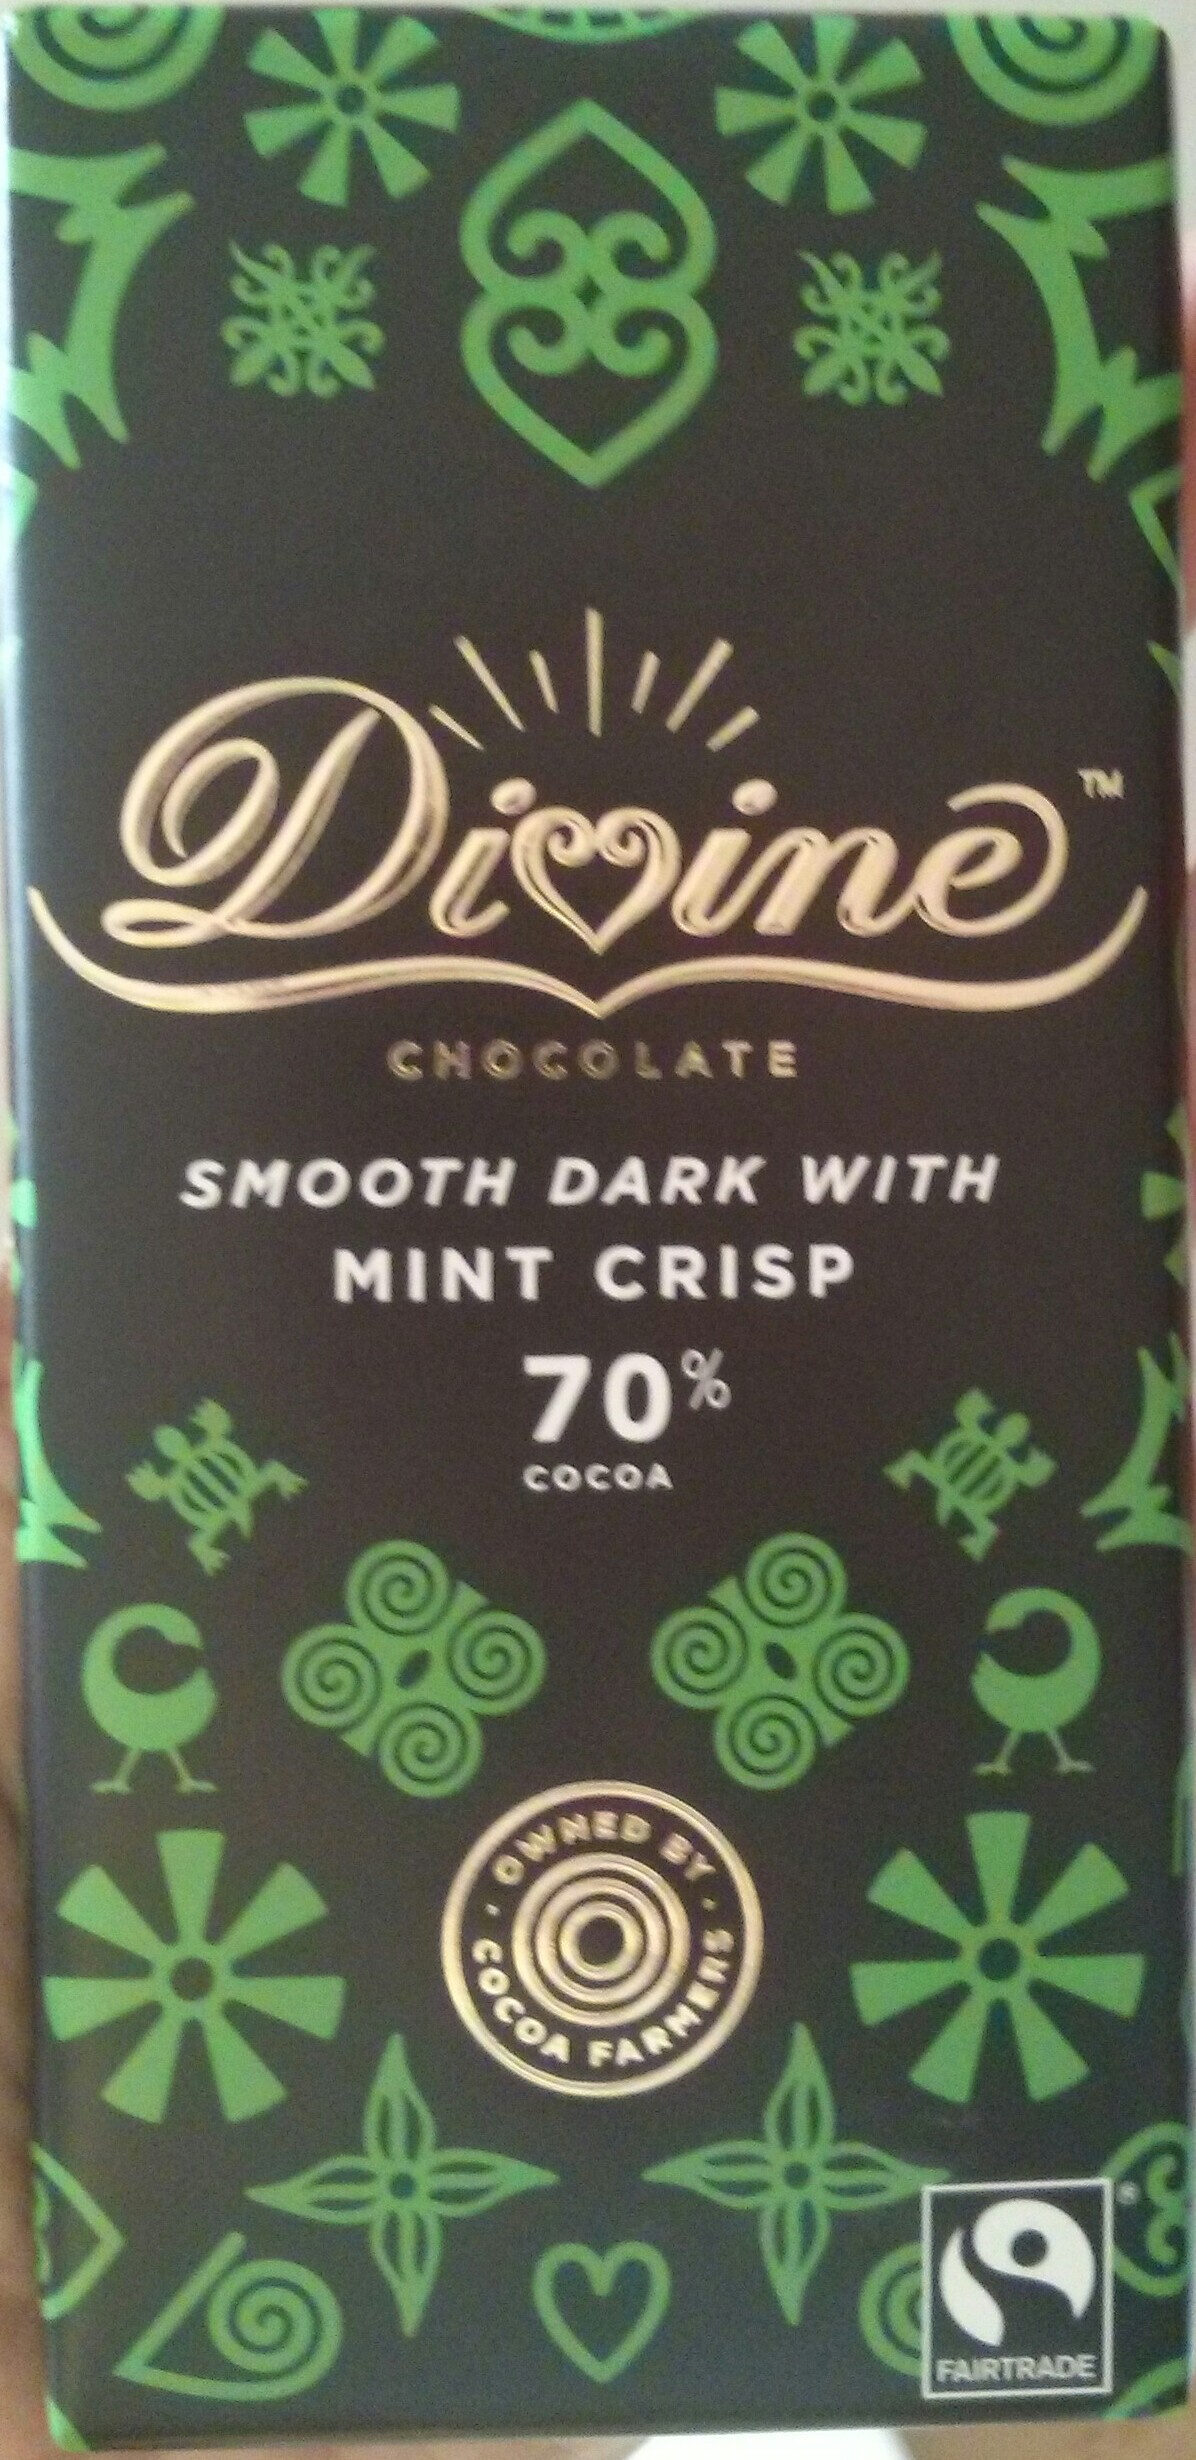 Divine chocolate smooth dark eith mint crisp - Product - en